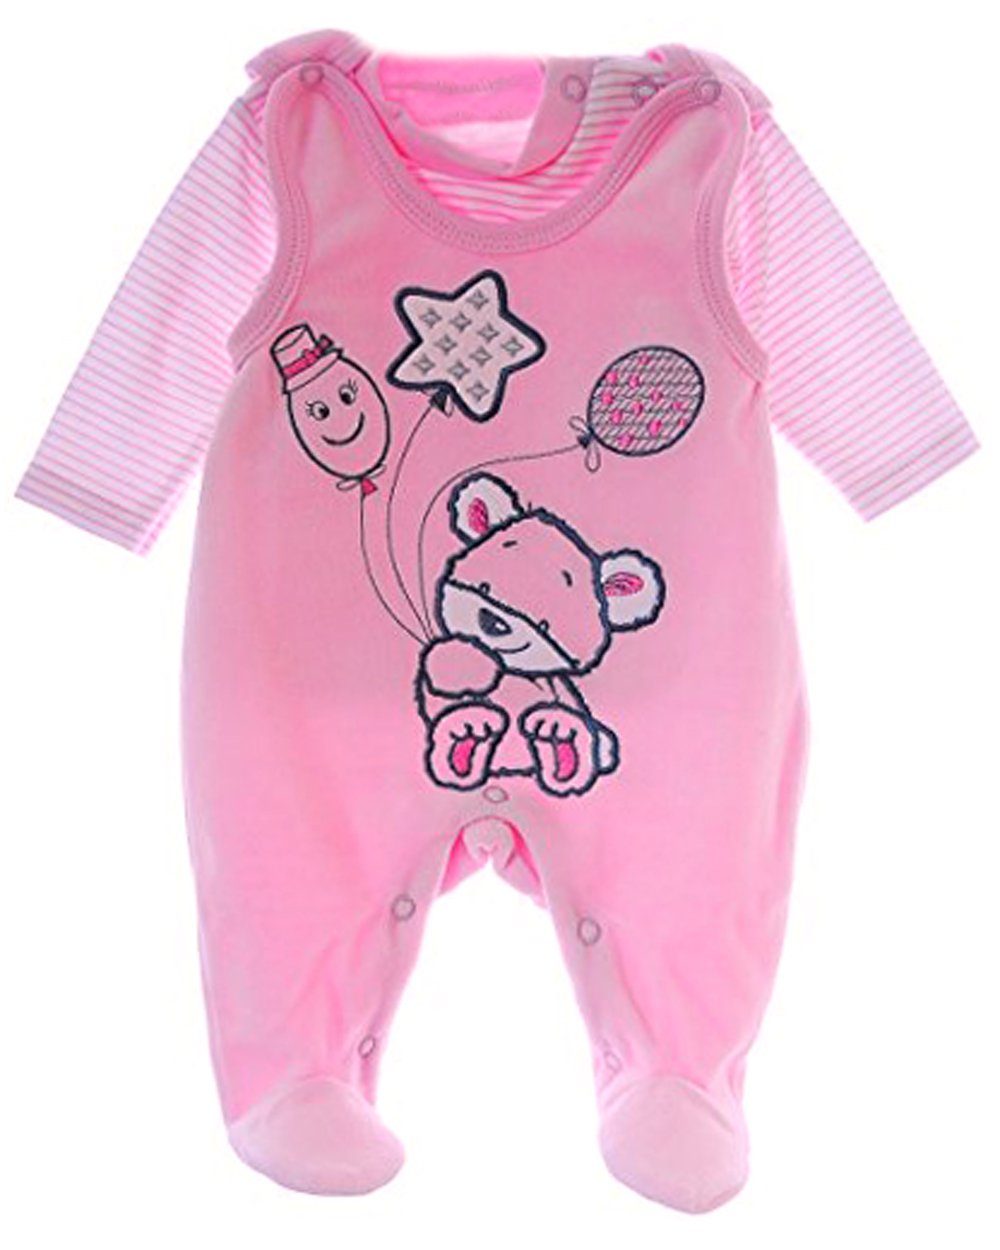 La Bortini Strampler Strampler und Shirt Set Baby Anzug 50 56 62 68